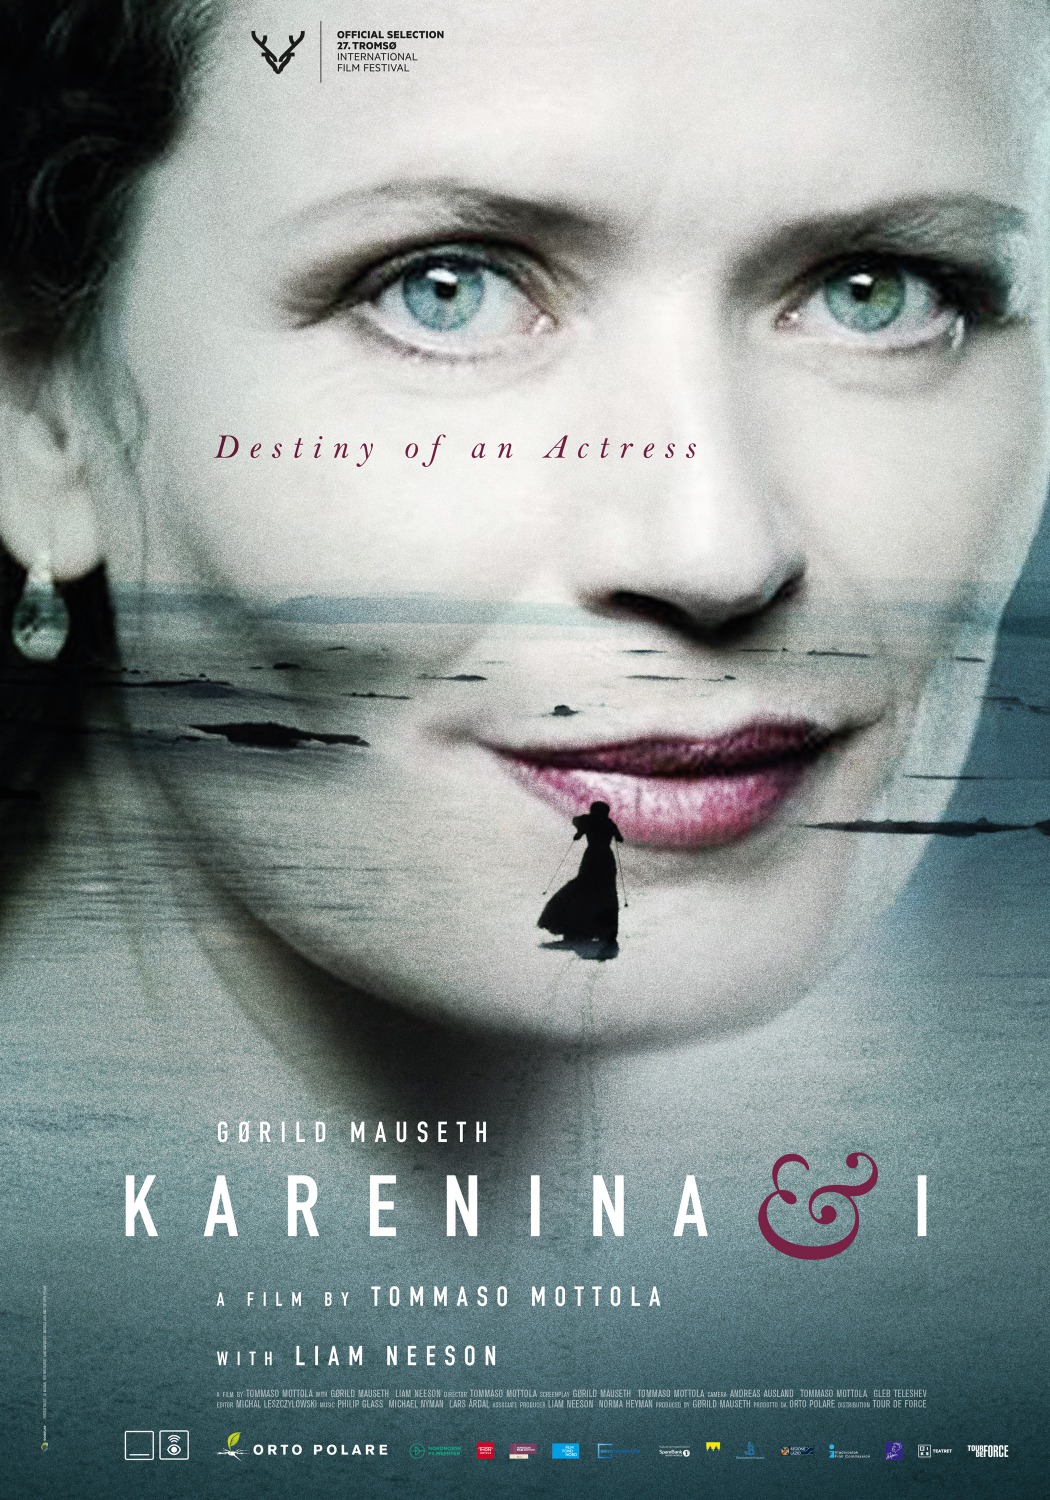 Extra Large Movie Poster Image for Karenina & I 